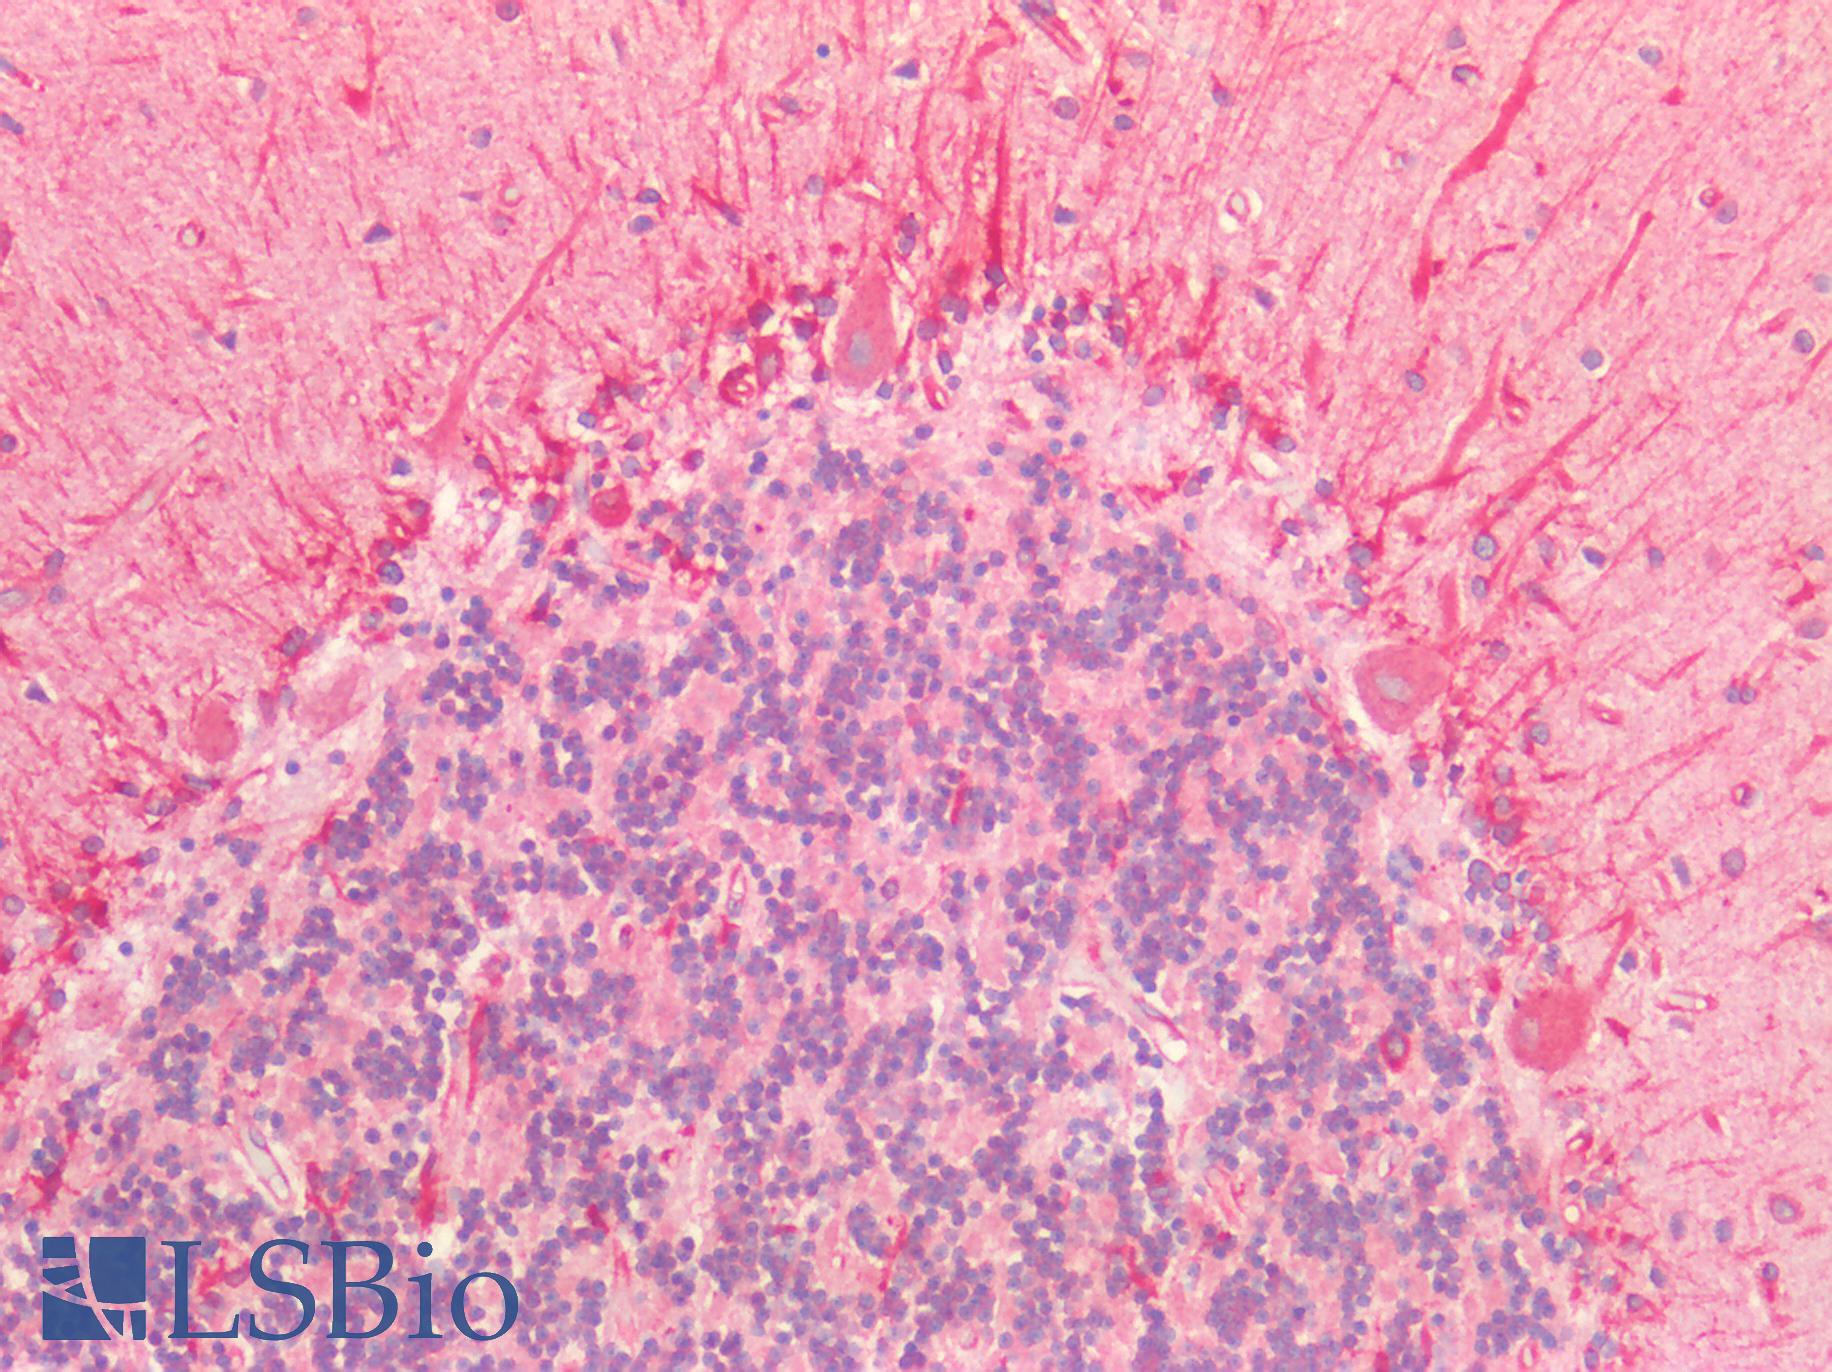 CD47 Antibody - Human Brain, Cerebellum: Formalin-Fixed, Paraffin-Embedded (FFPE)